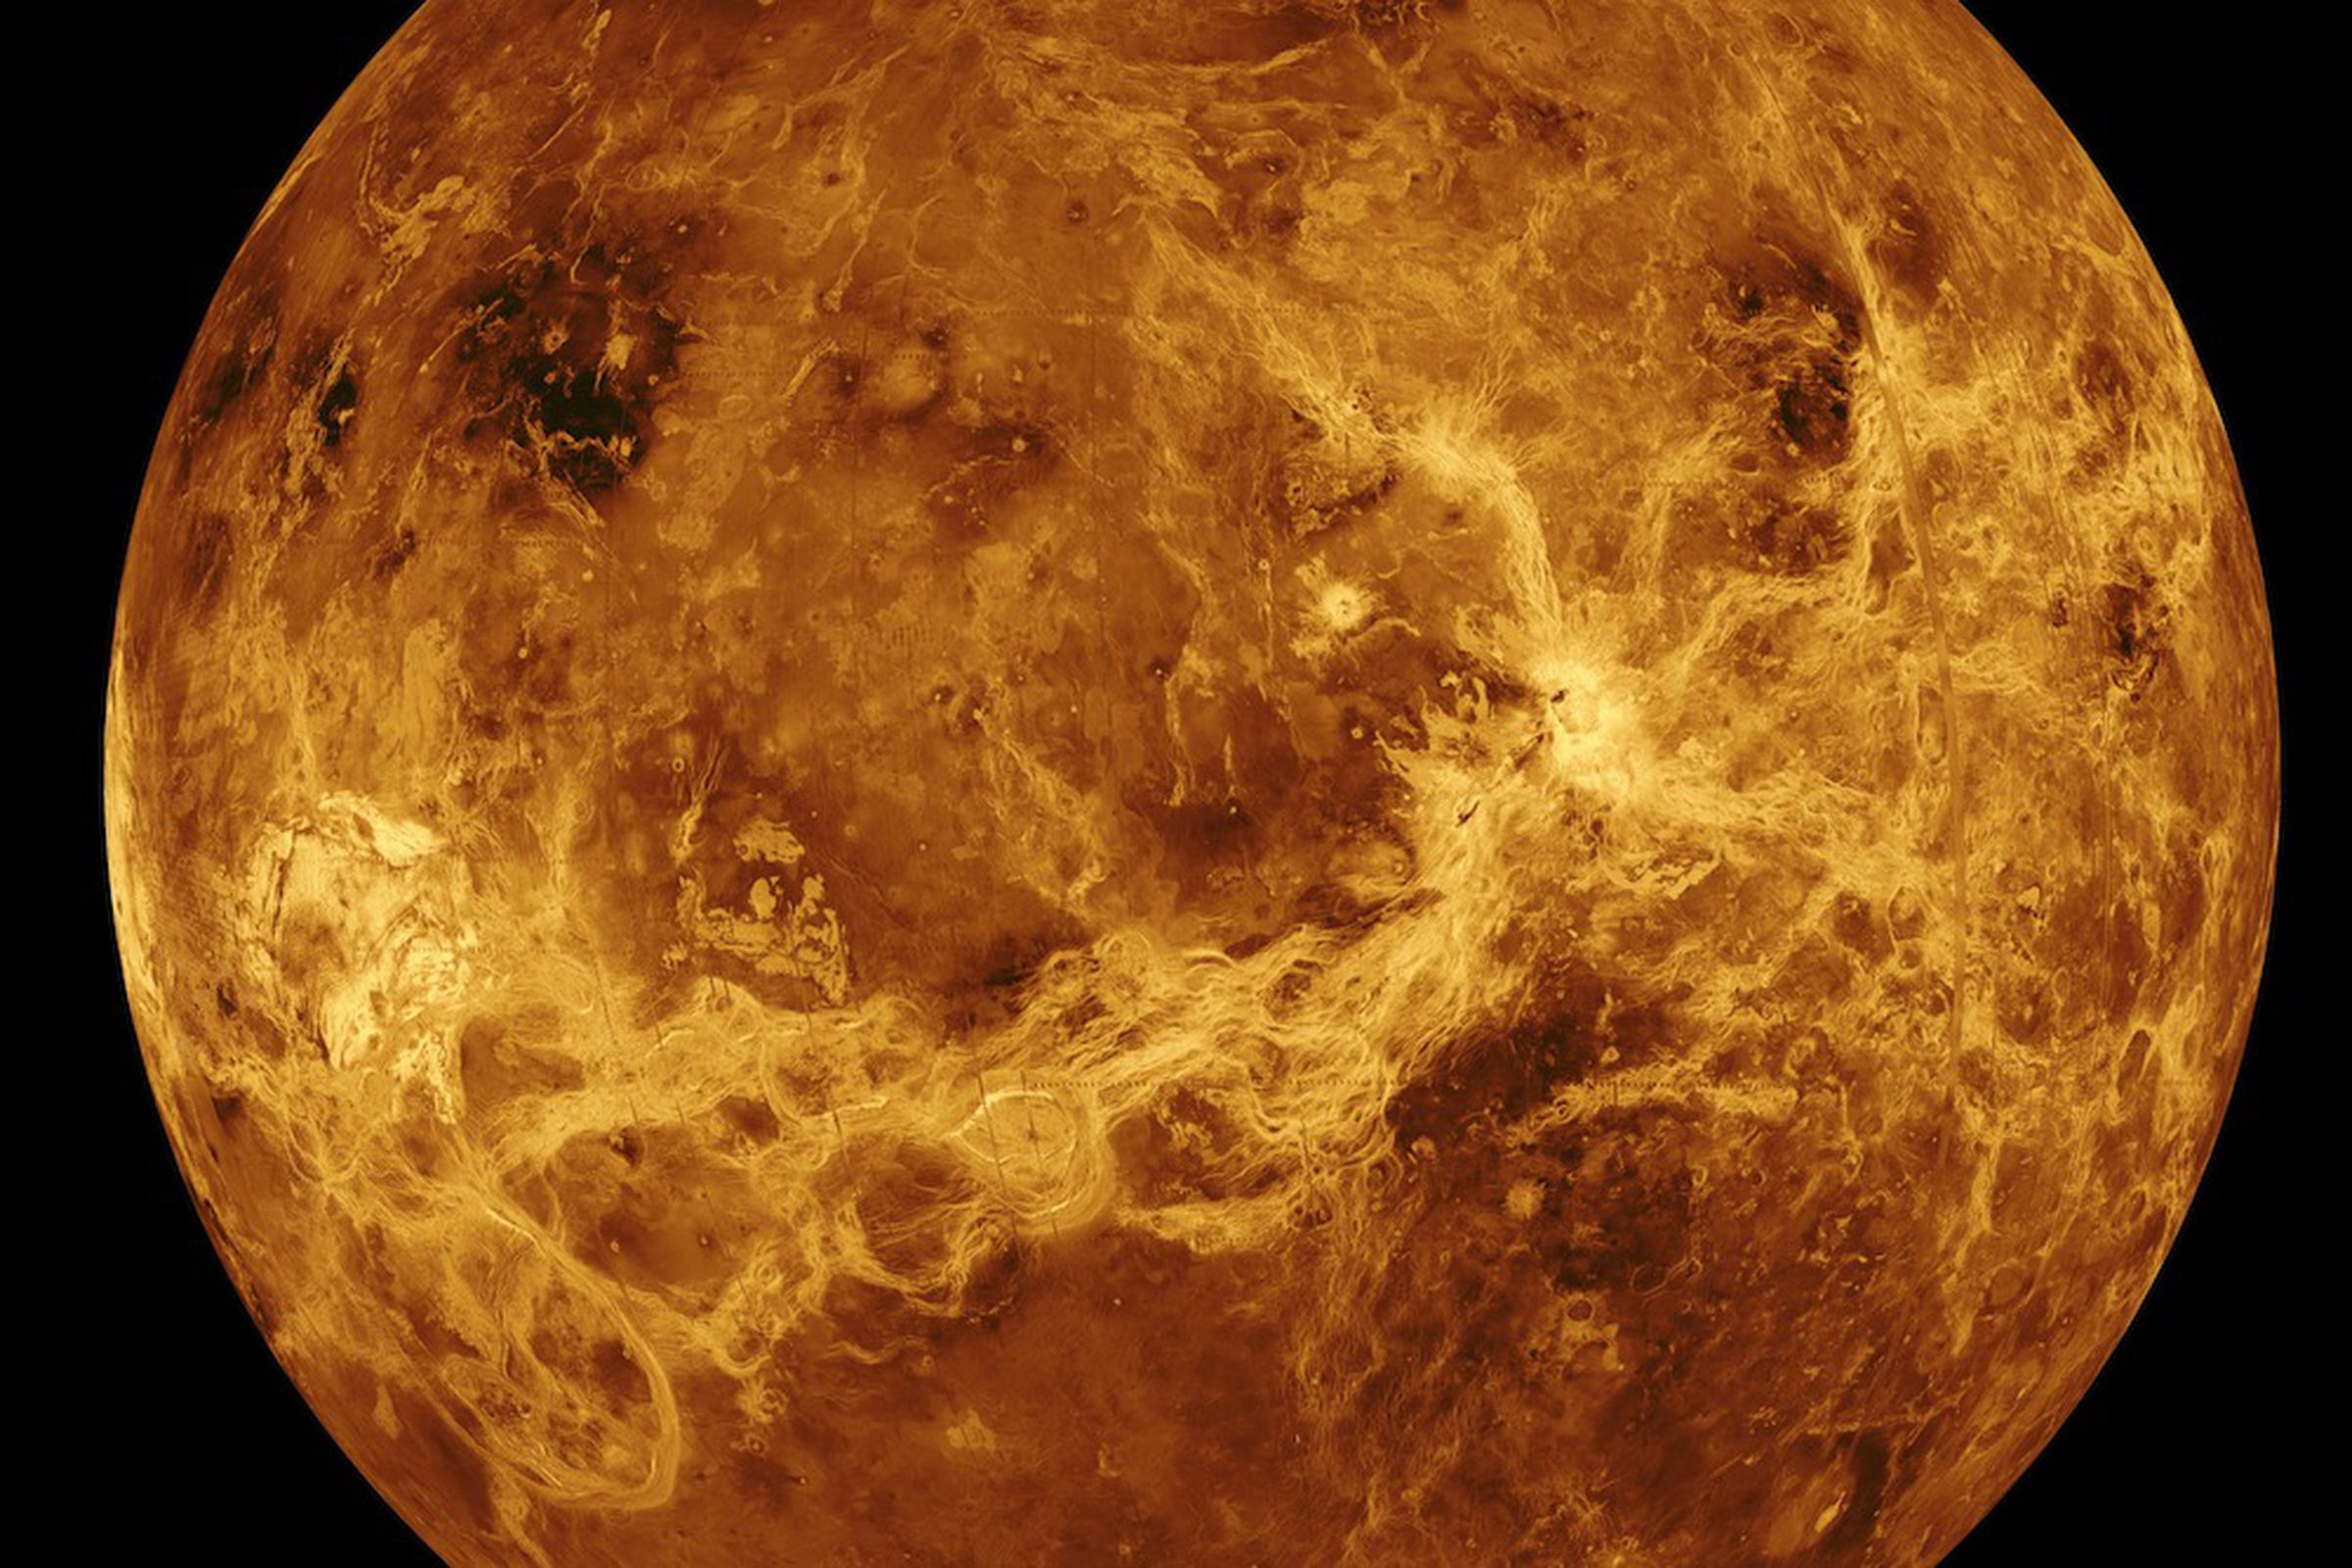 Venus header image (Credit: NASA/JPL)